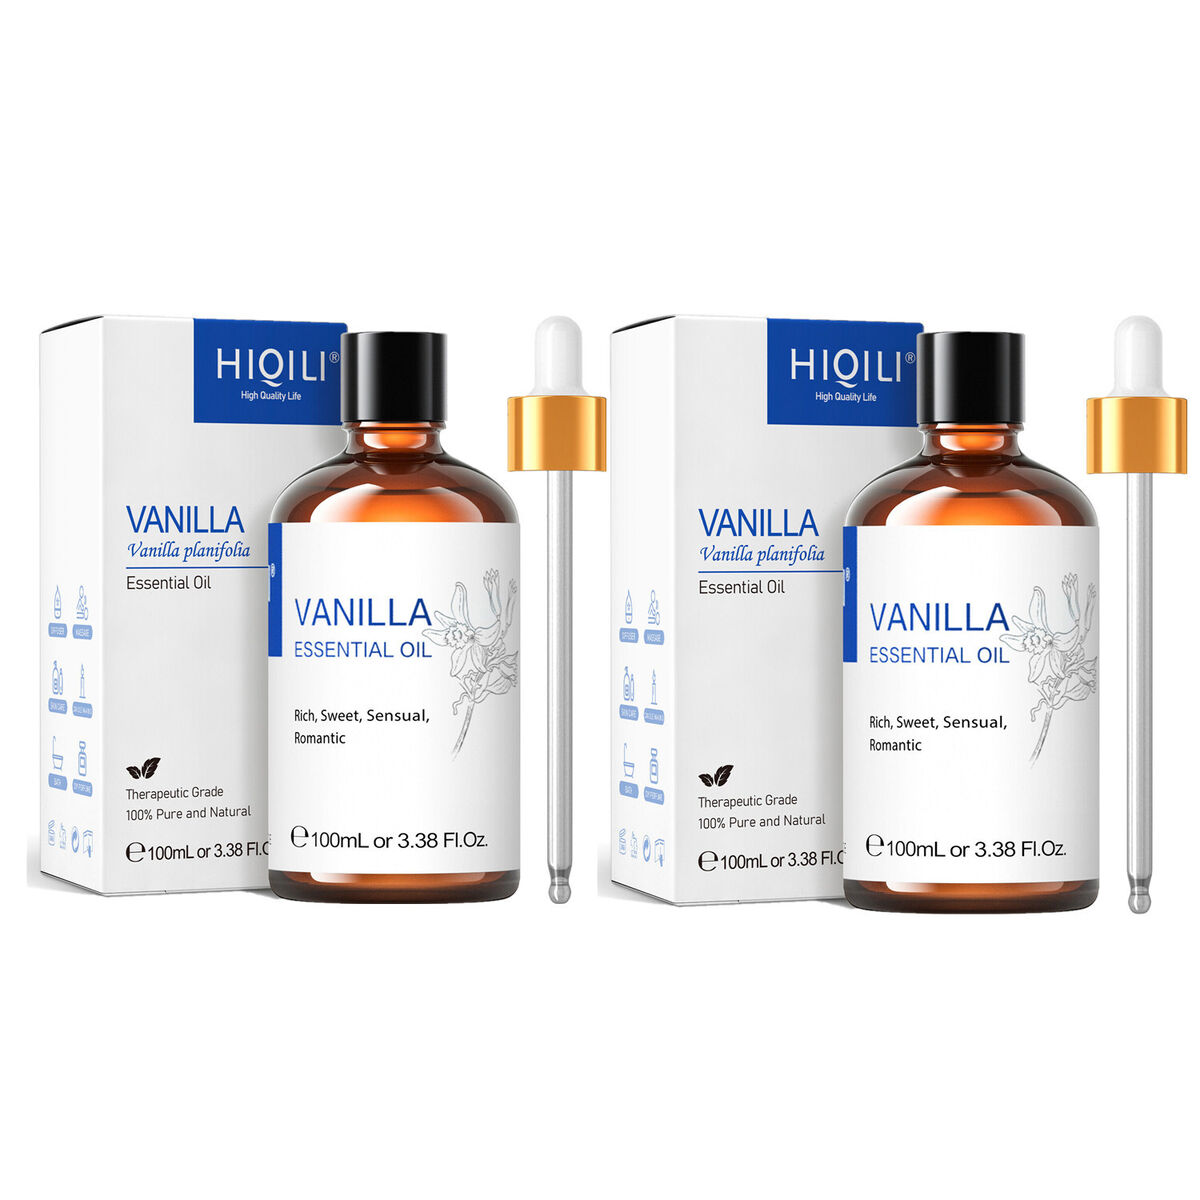 HIQILI Essential Oils - 100% Pure Undiluted - Therapeutic Grade  Aromatherapy Oil